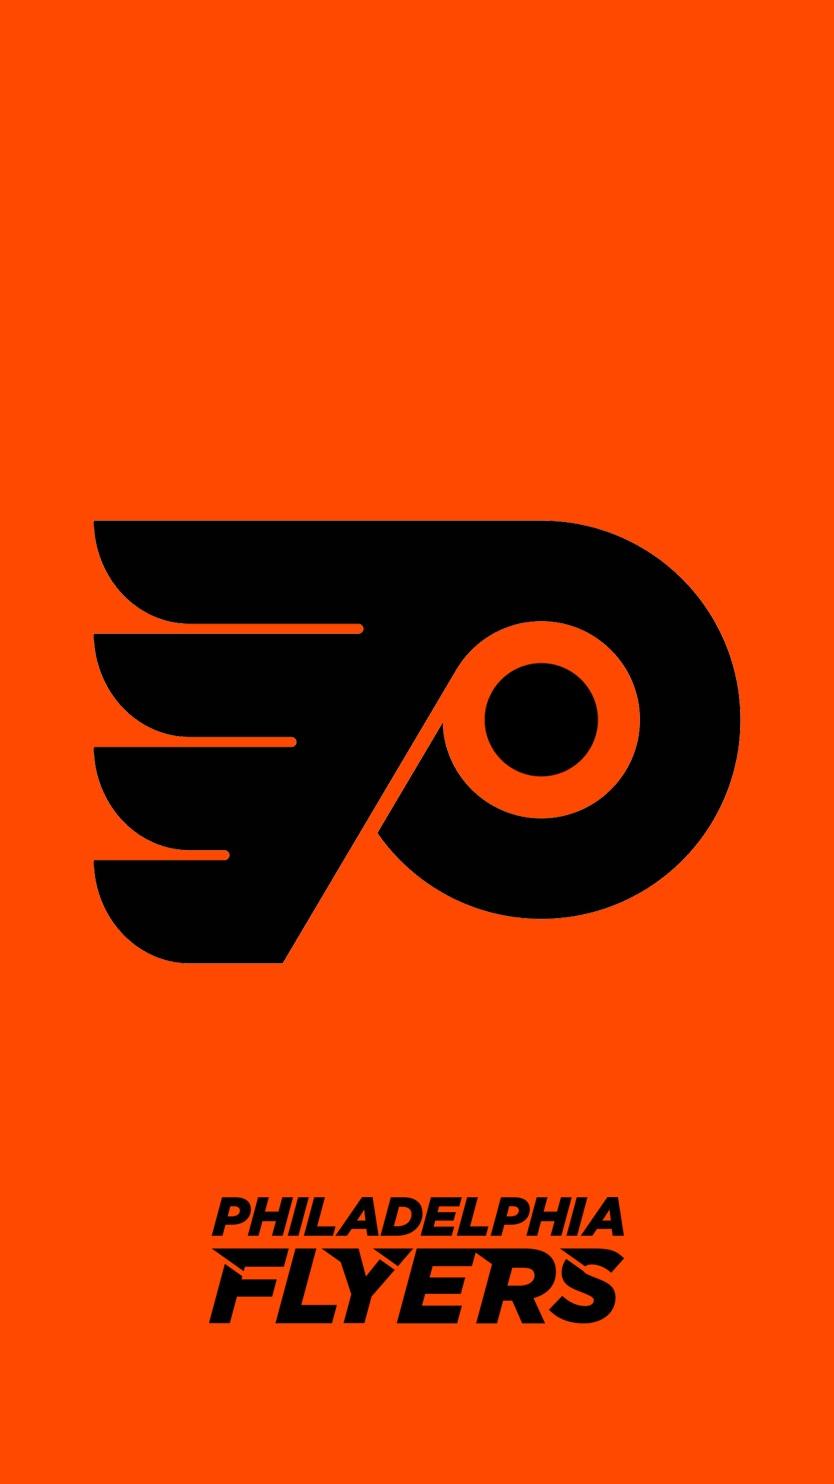 75+] Philadelphia Flyers Wallpaper - WallpaperSafari